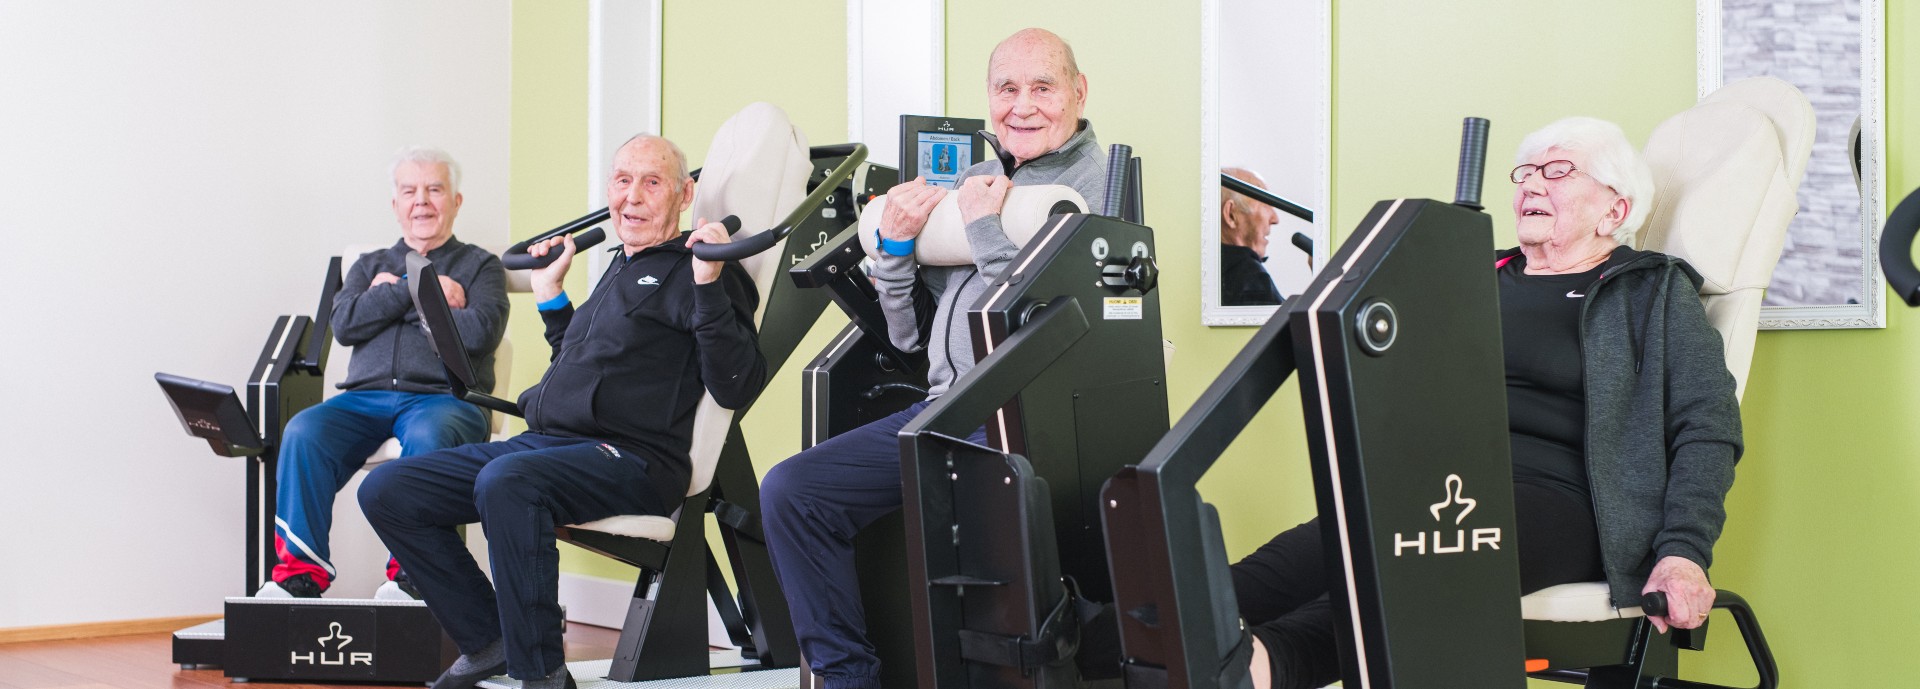 Older people using resistance training equipment